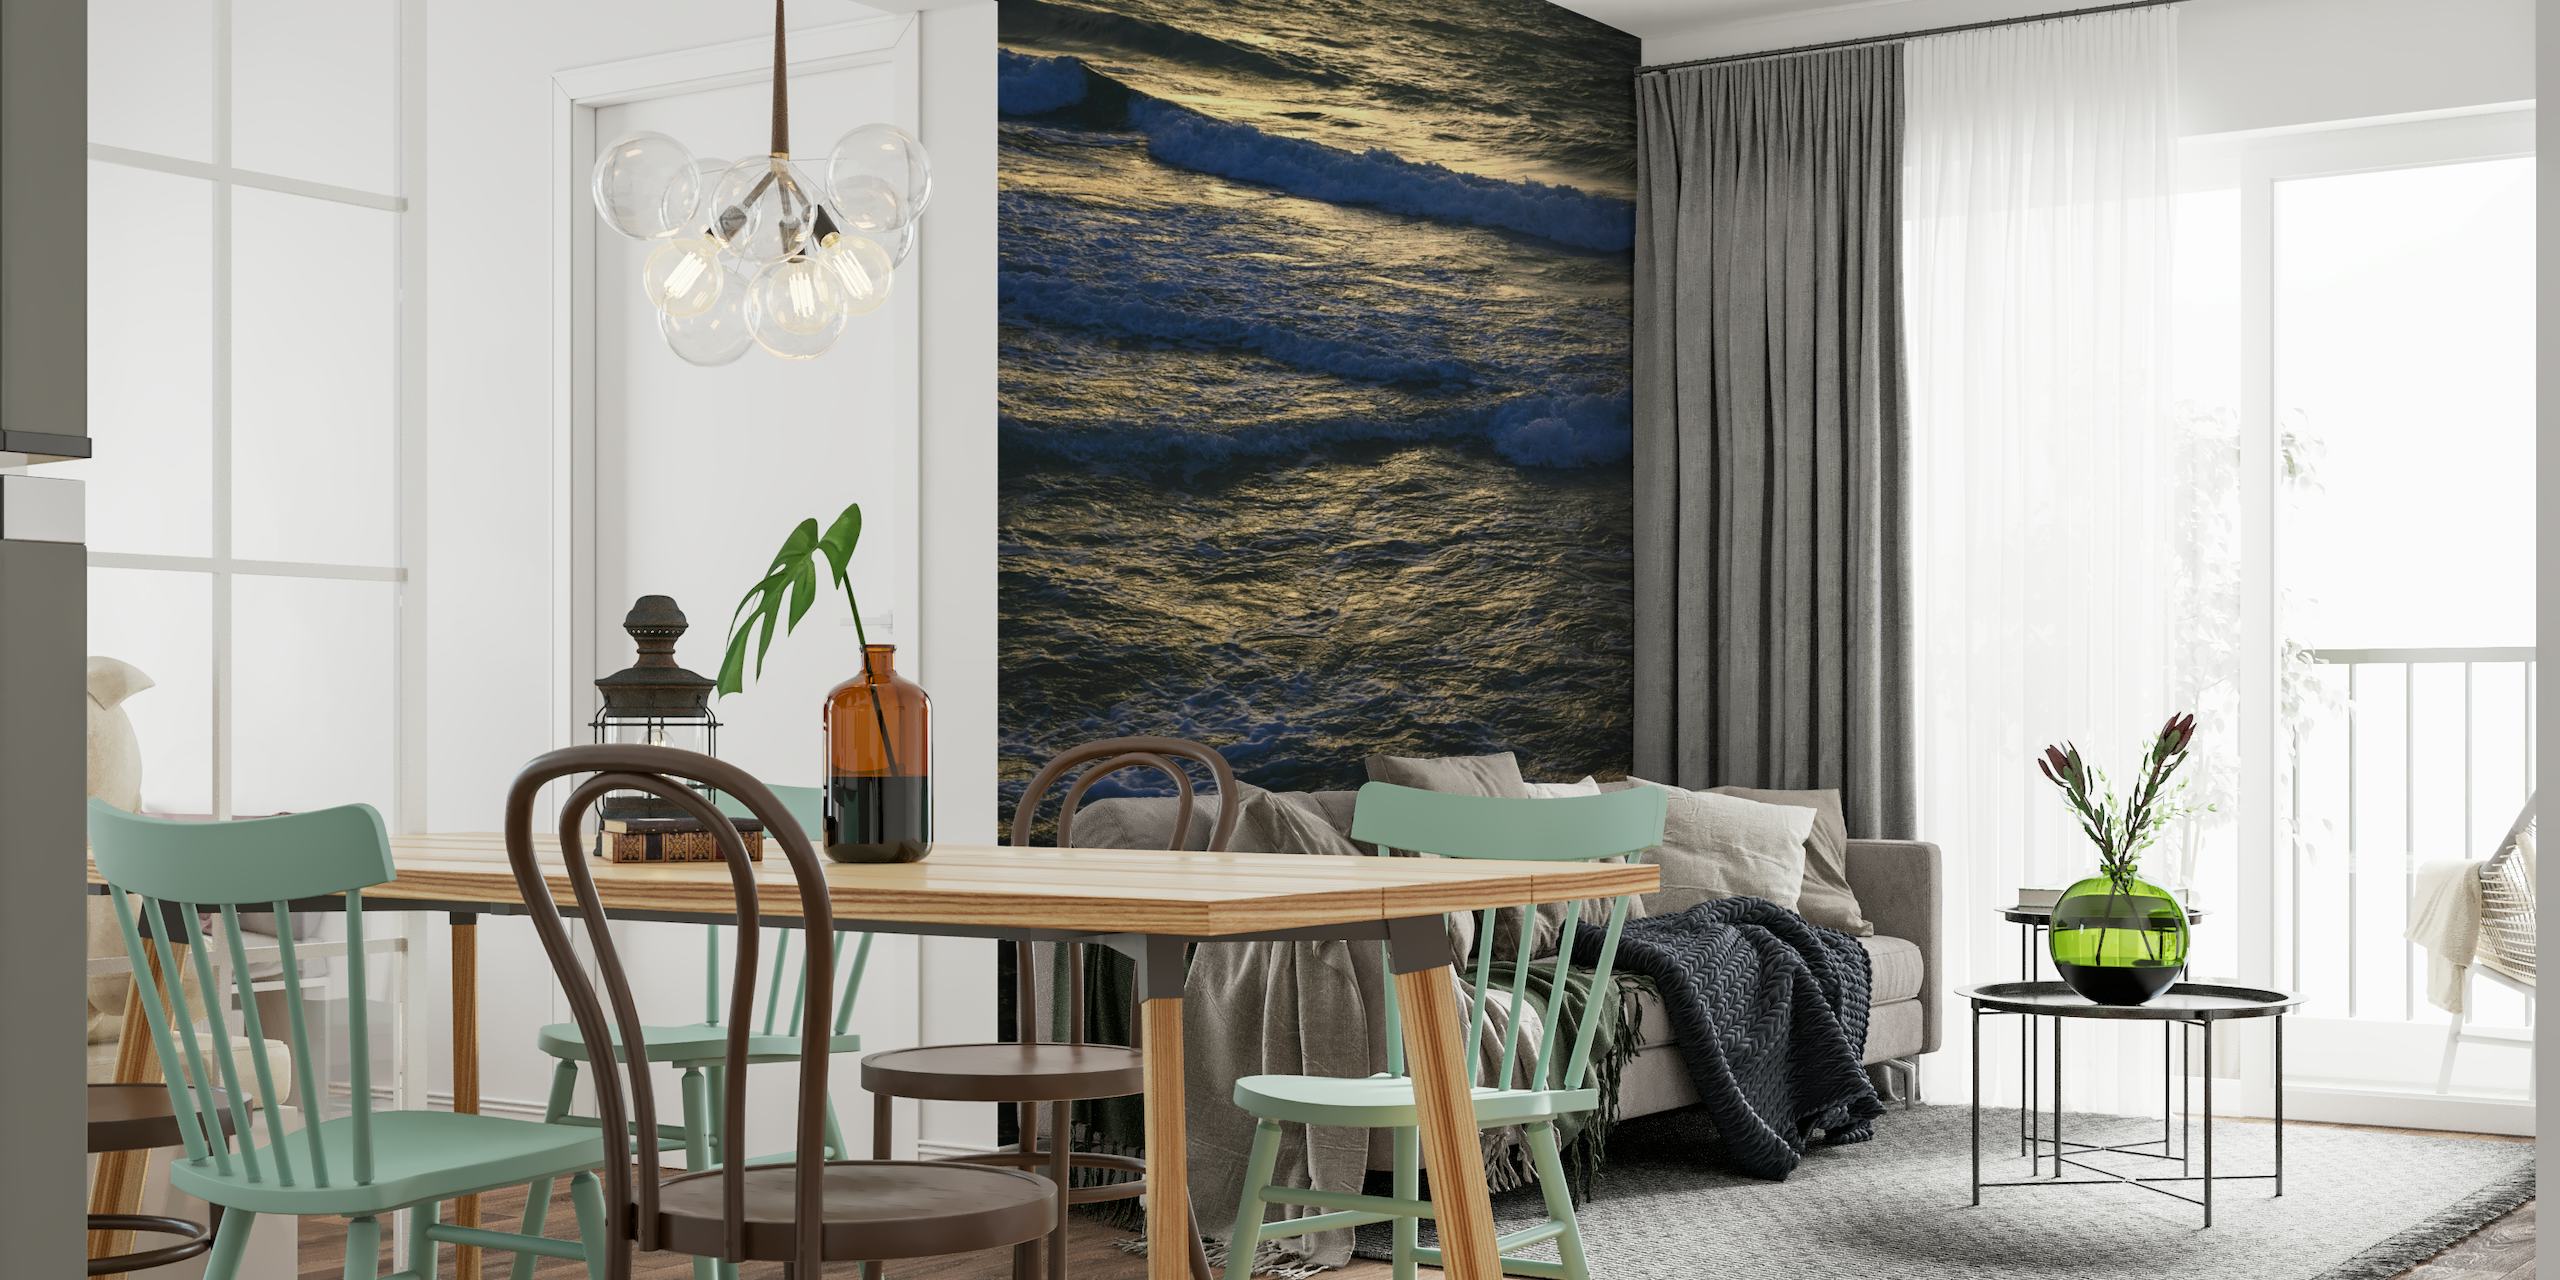 Oceanski valovi zidni mural koji prikazuje miran morski krajolik u sumrak, "Seaside 39" za uređenje doma